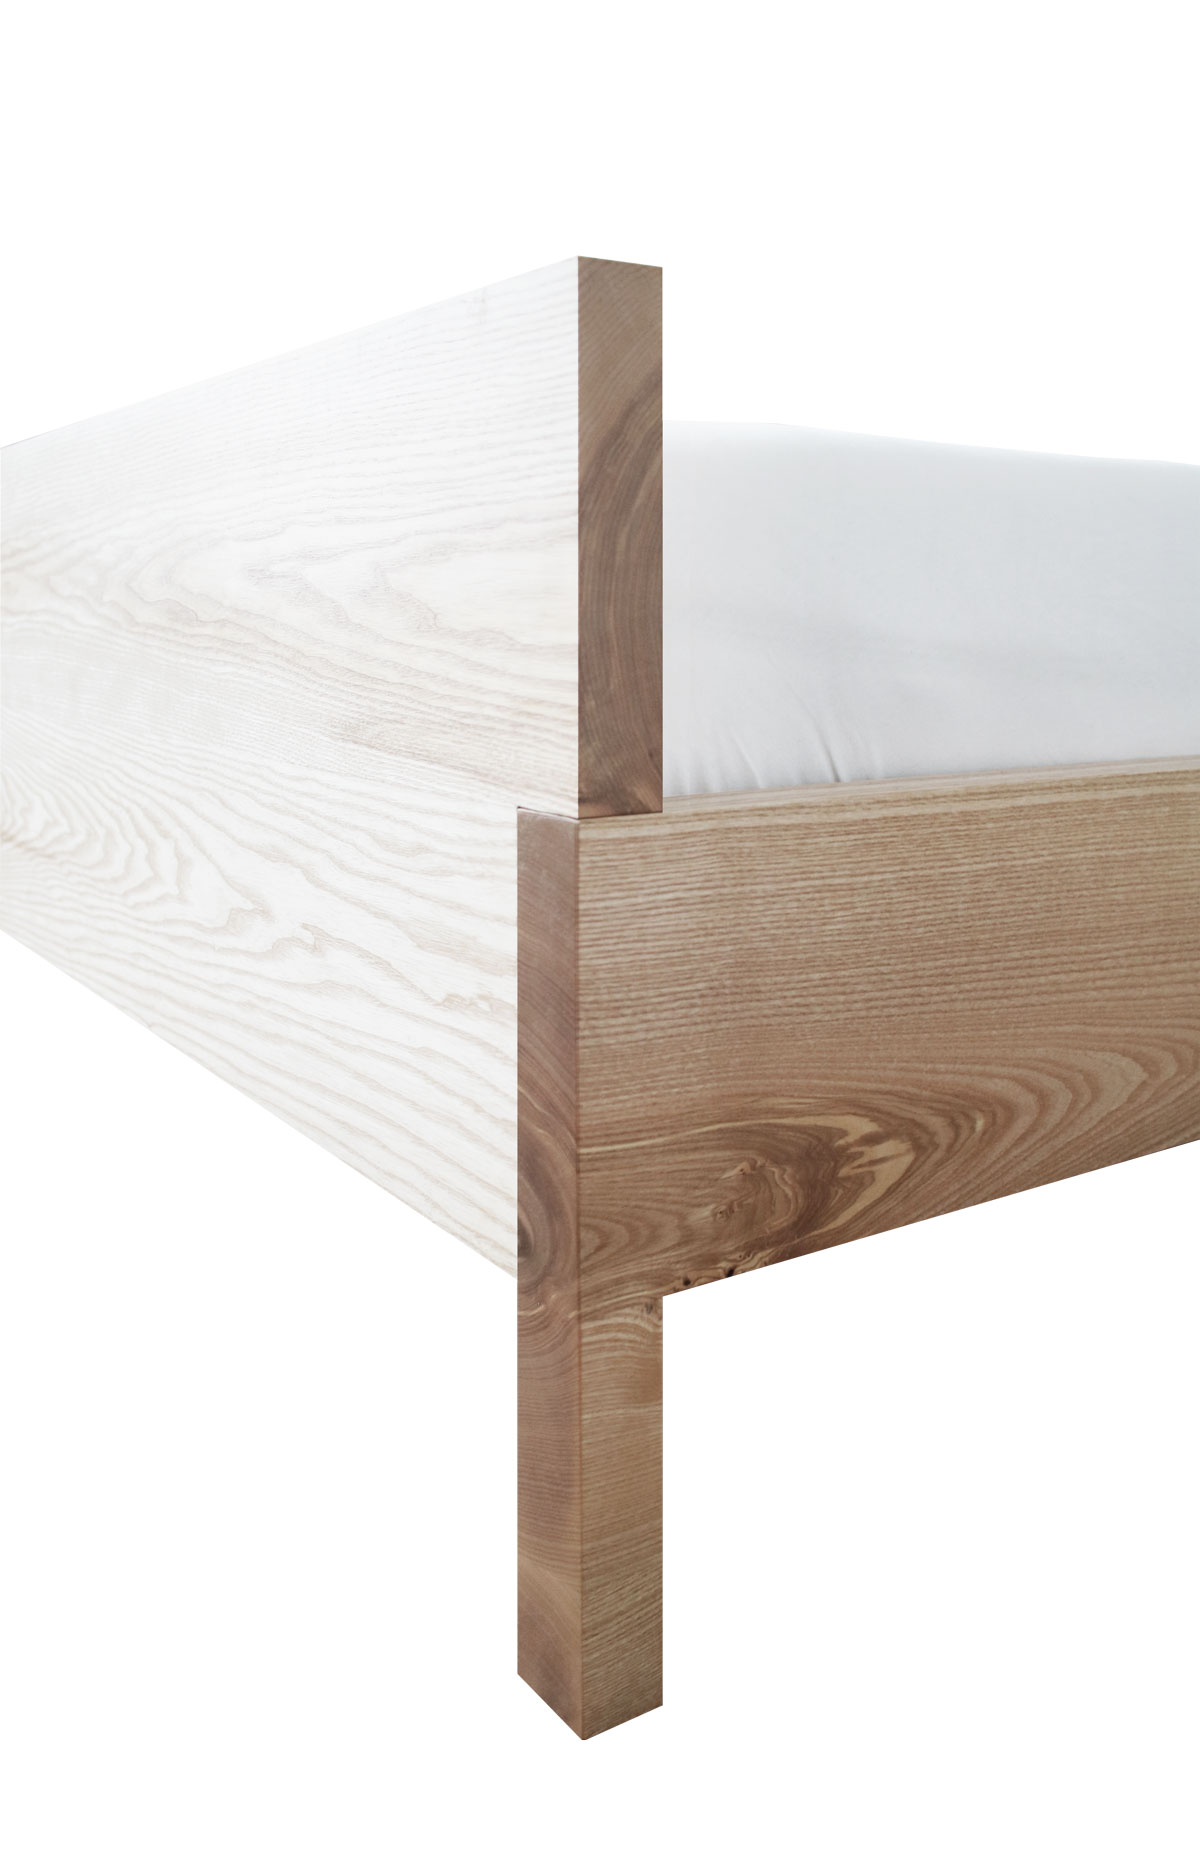 Möbeldesign-Piktogramm-zugvogel-Thumbnails-Möbel-Regal-Bett-Isometrie-Isometric-Furniture-Colour-Arcitecture-bed-doppelbett-B